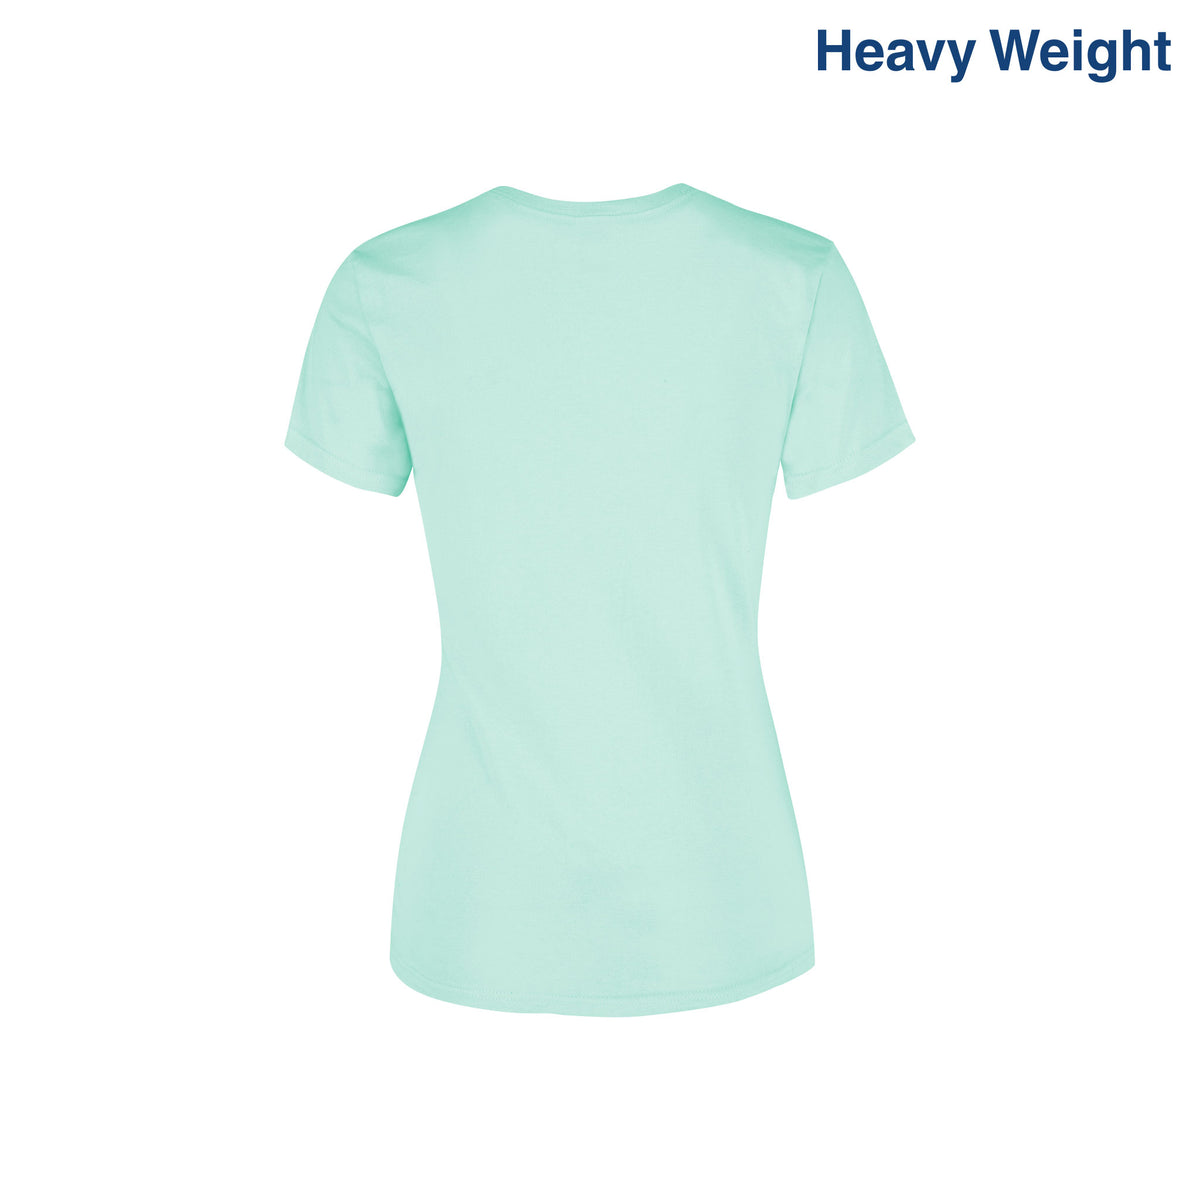 Women’s Heavy Weight Crew Neck Short Sleeve Silhouette T-Shirt (Aqua)